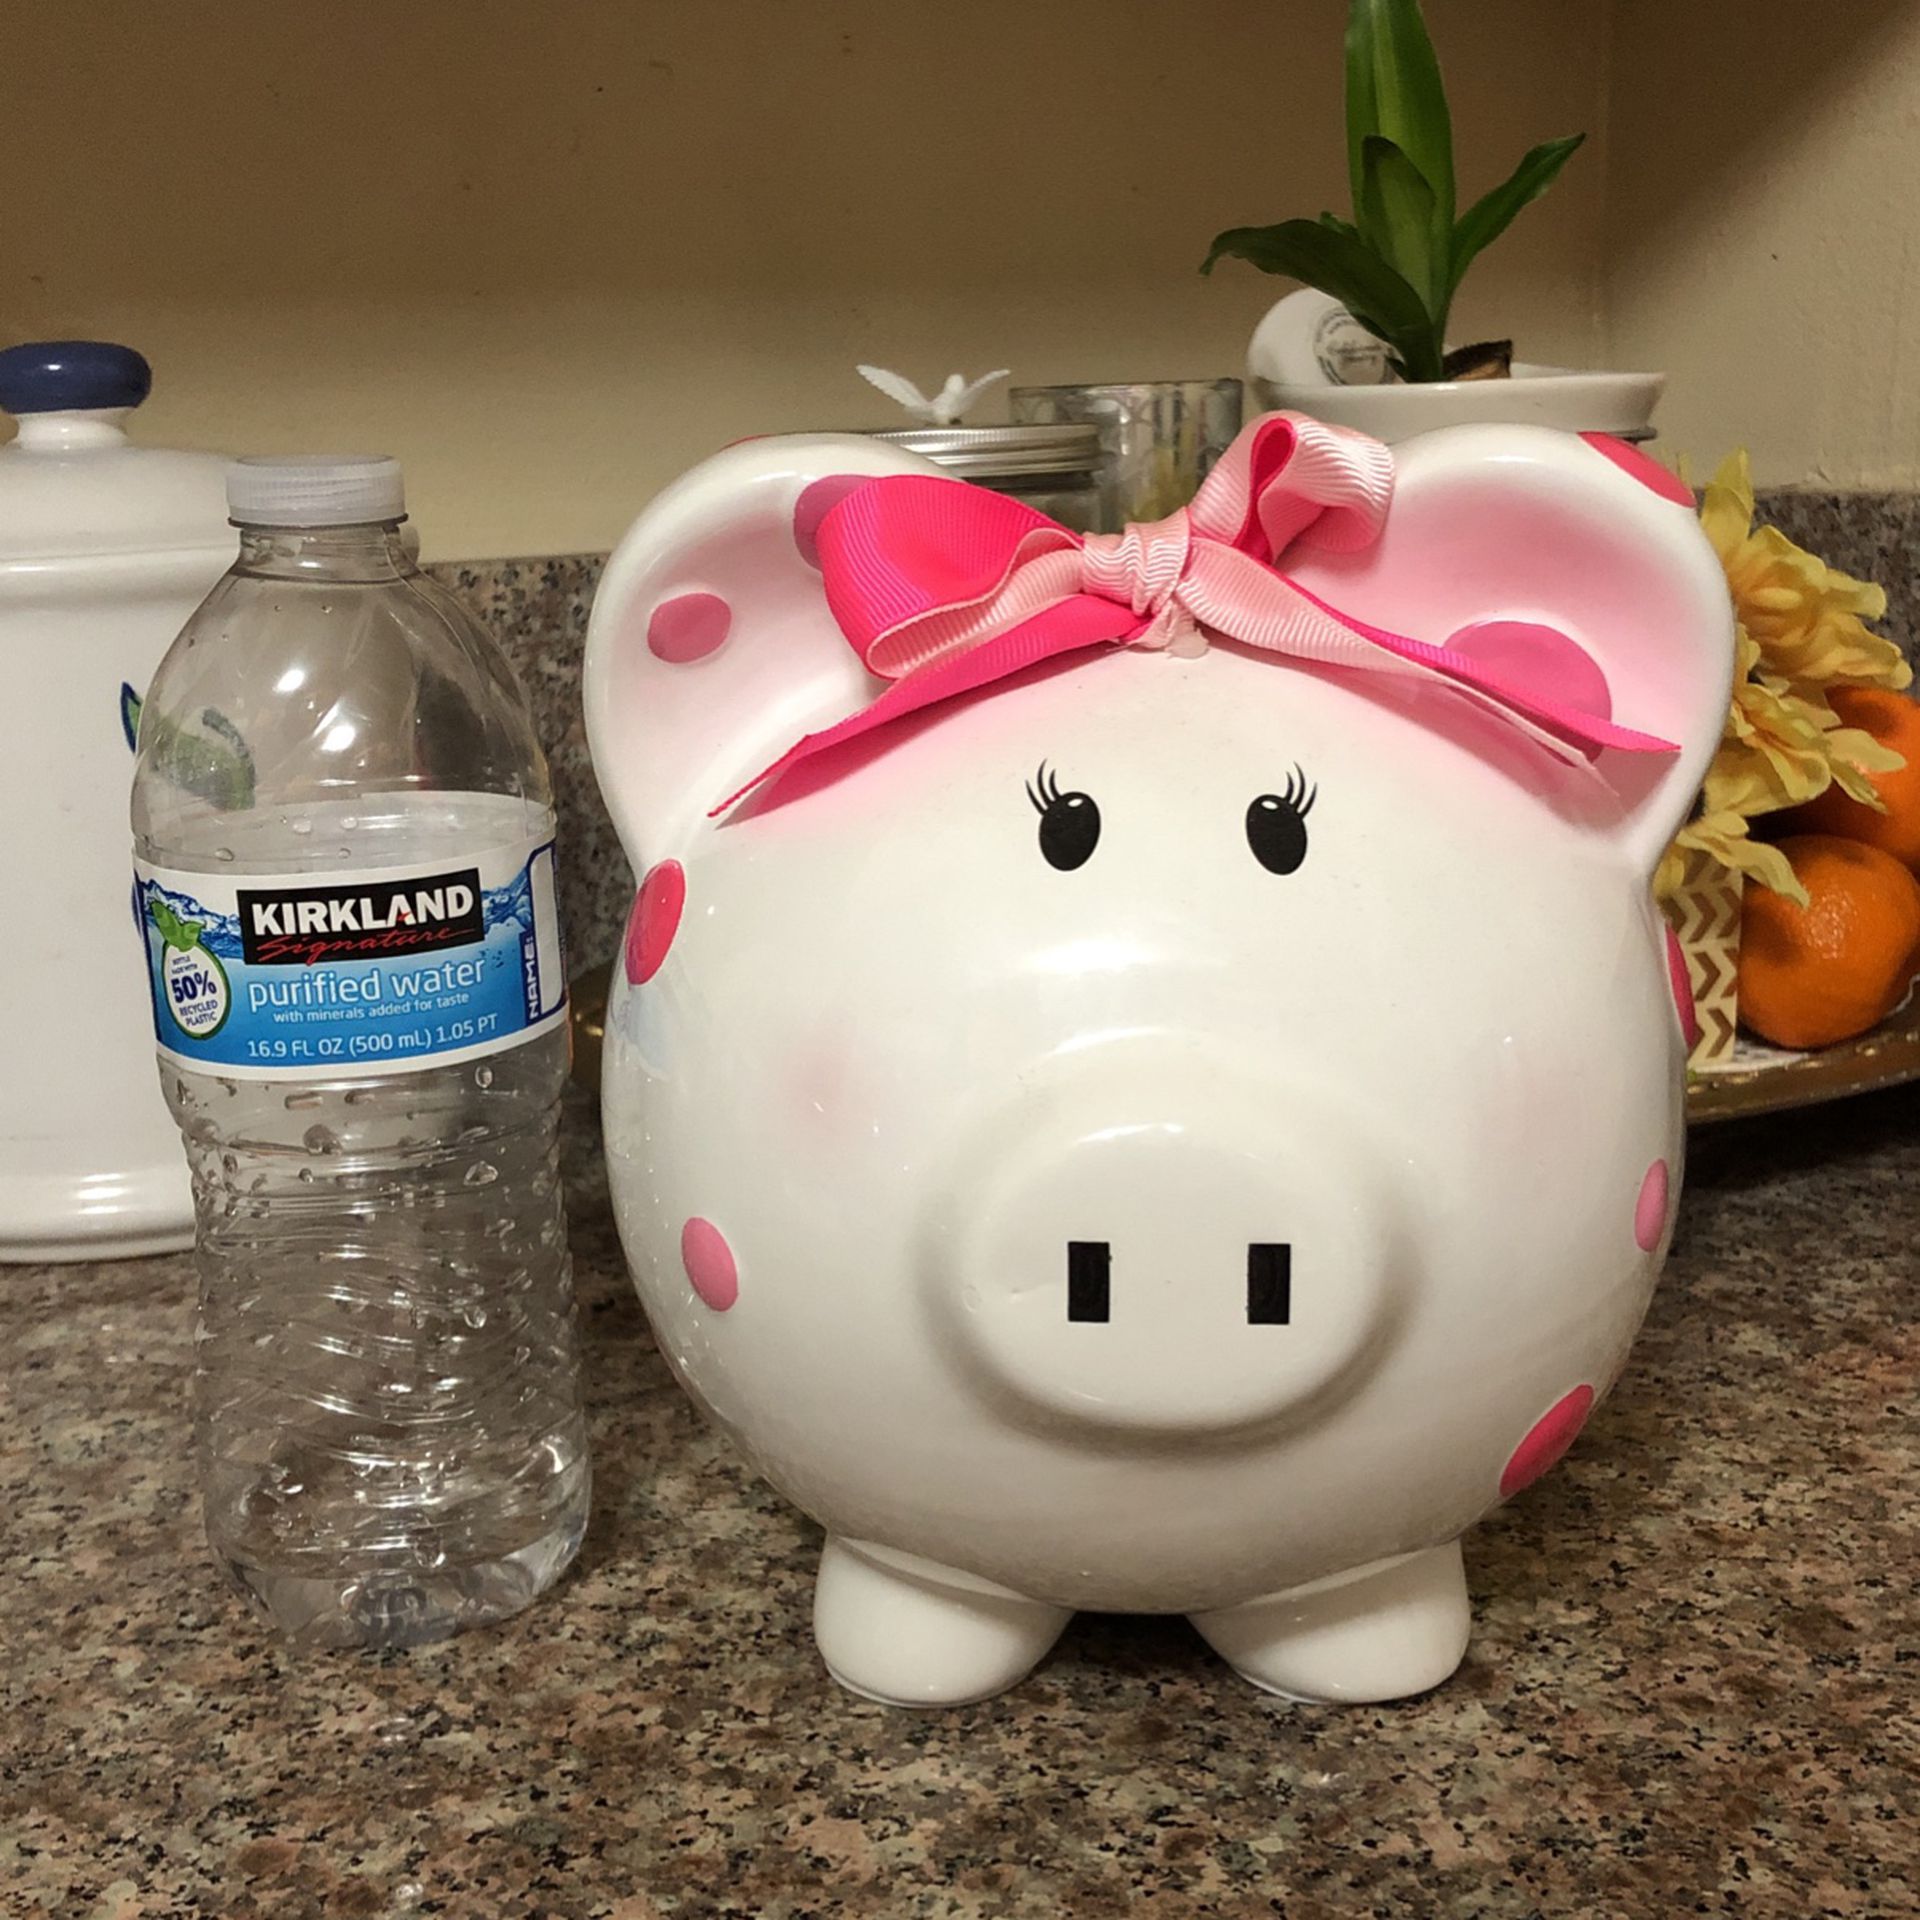 Child to Cherish Ceramic Polka Dot Piggy Bank for Girls Pink